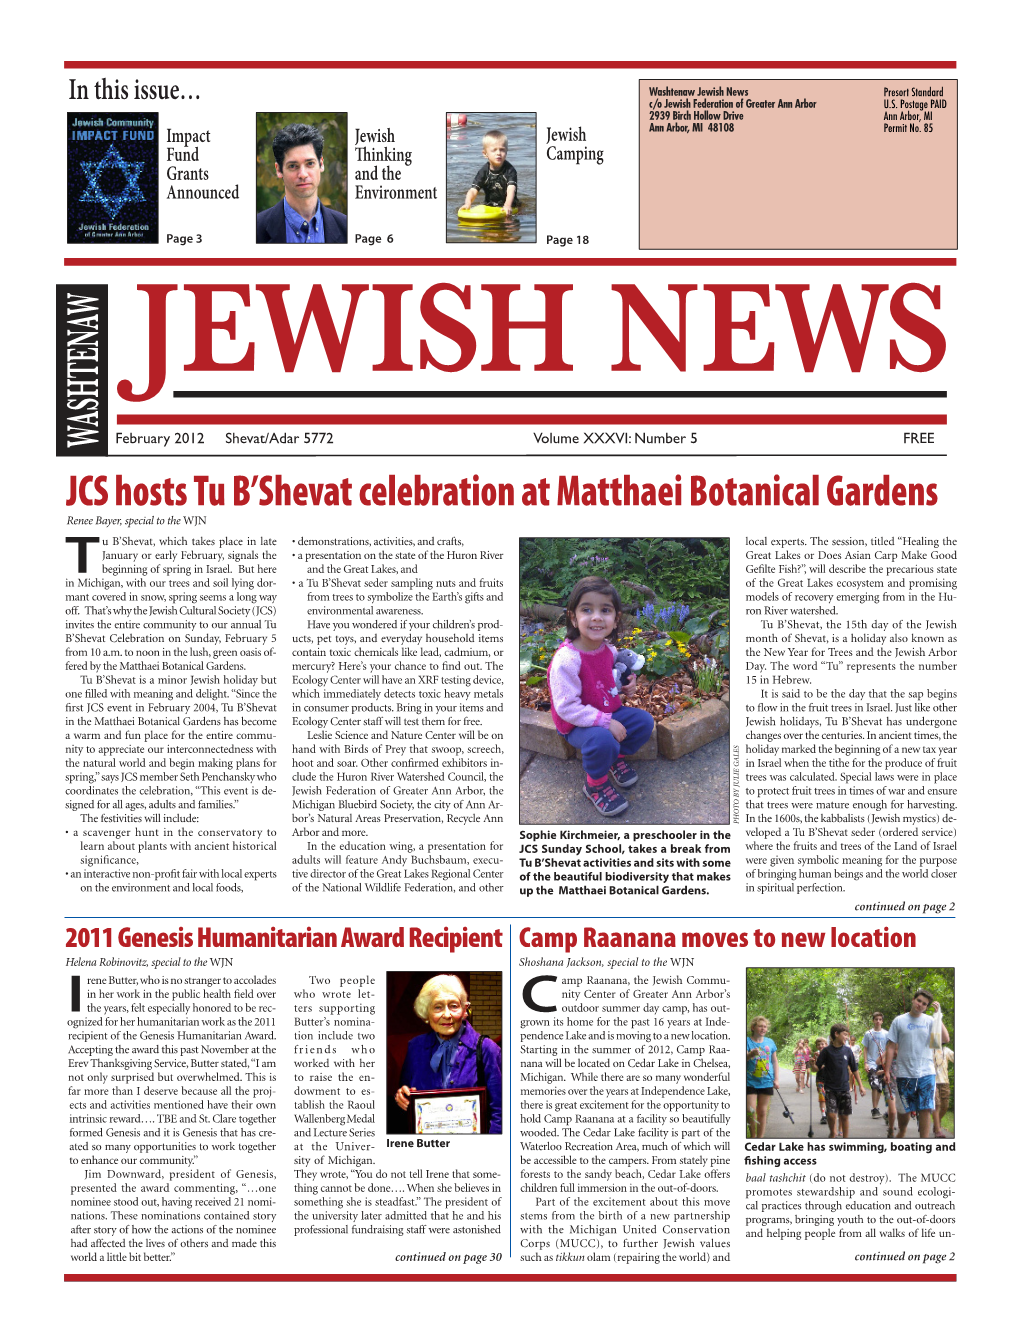 JCS Hosts Tu B'shevat Celebration at Matthaei Botanical Gardens